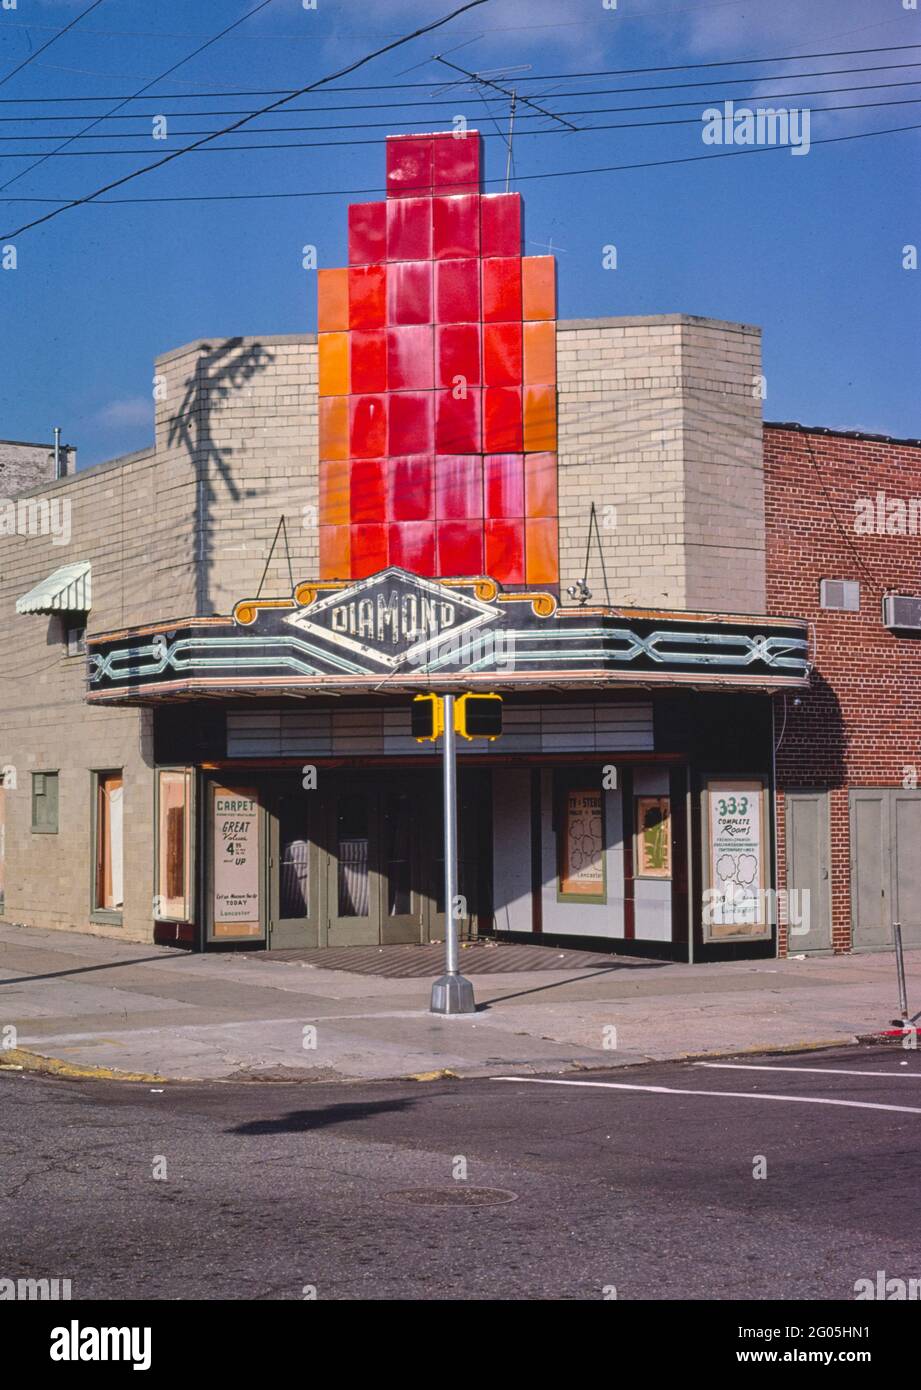 1970s America - Diamond Theatre, Tuscaloosa, Alabama 1979 Stockfoto